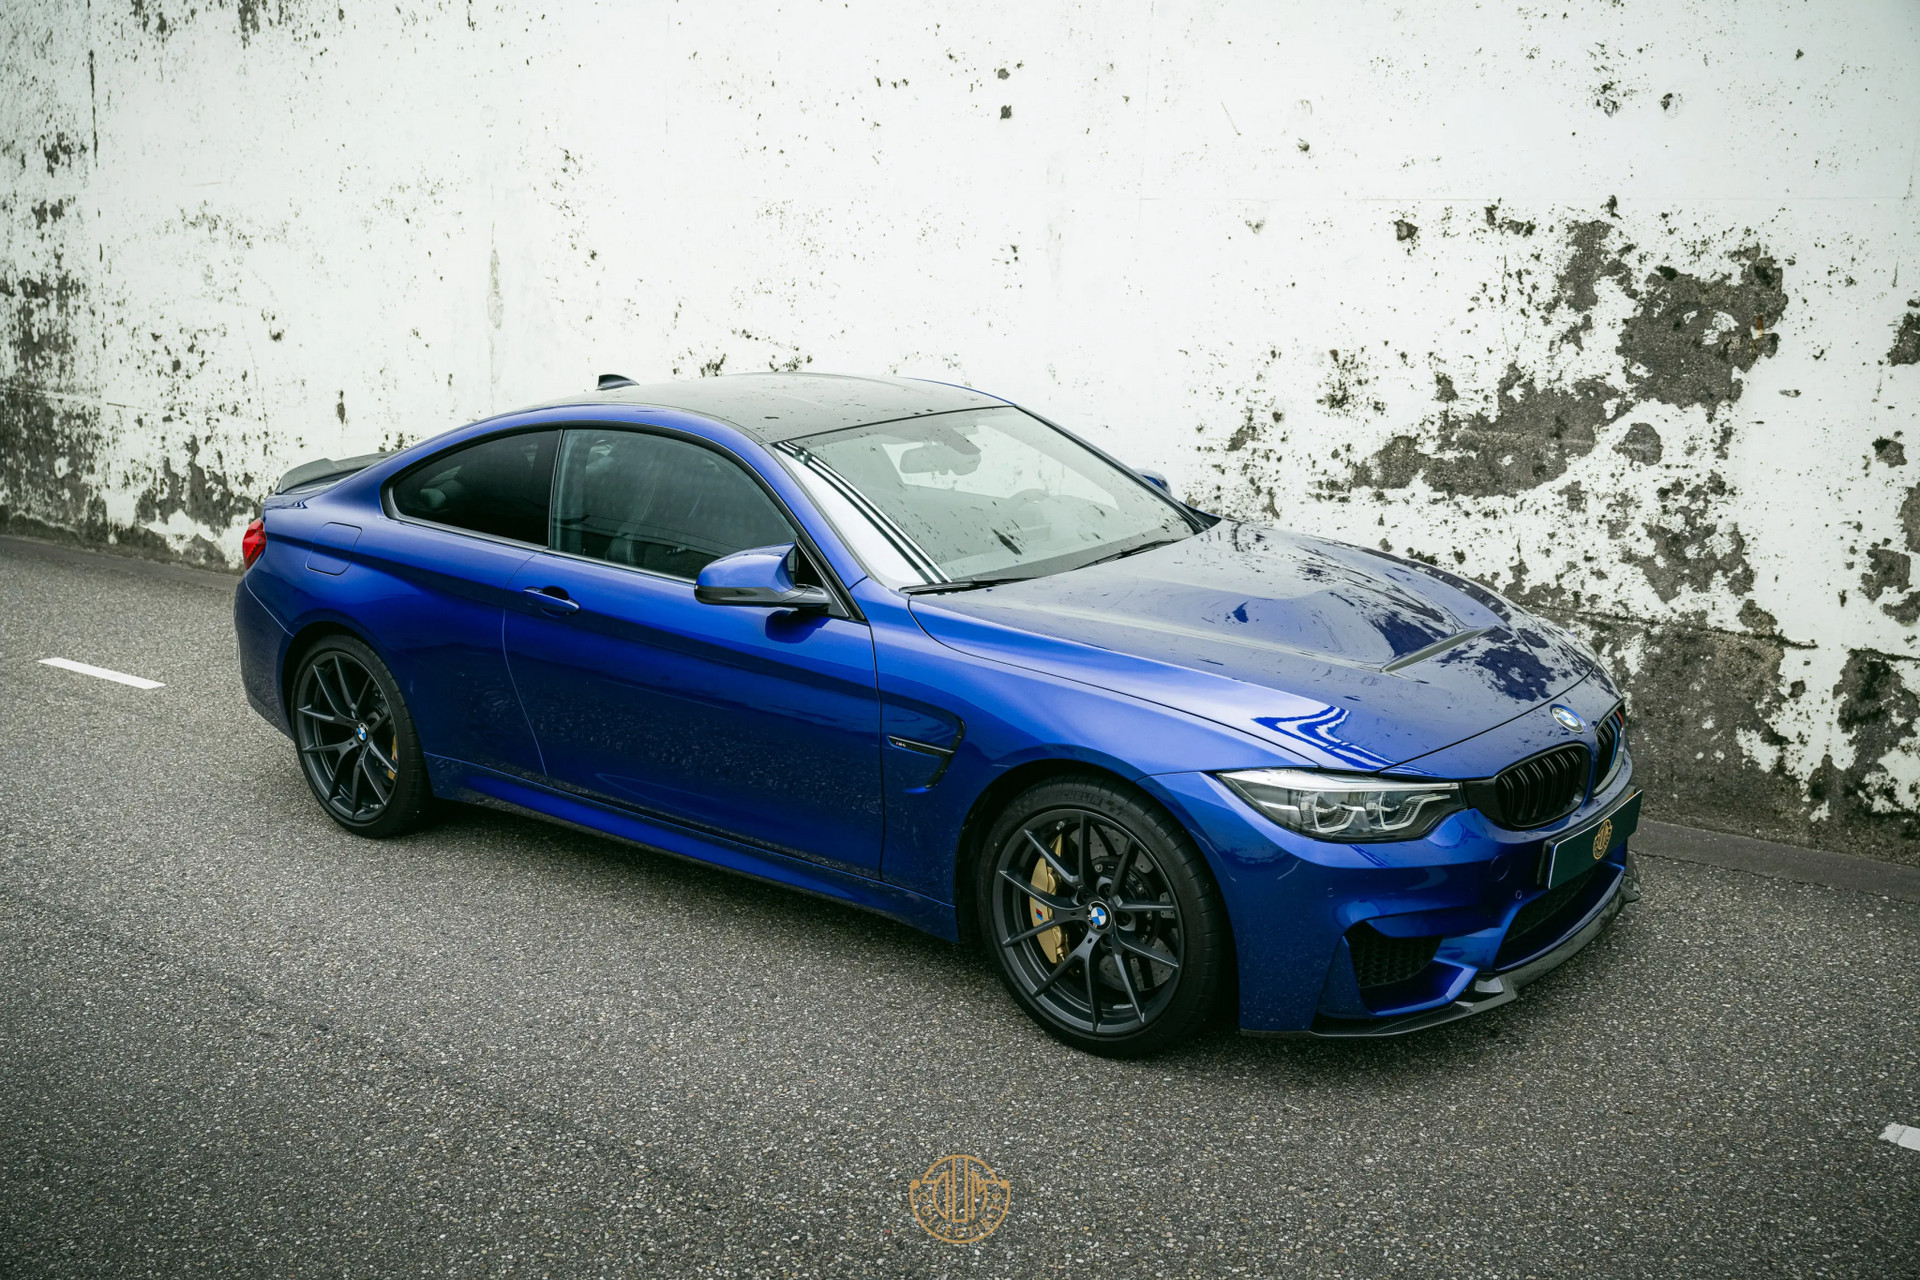 BMW 4 Serie Coupé M4 CS 2017 San marino blau metallic 64